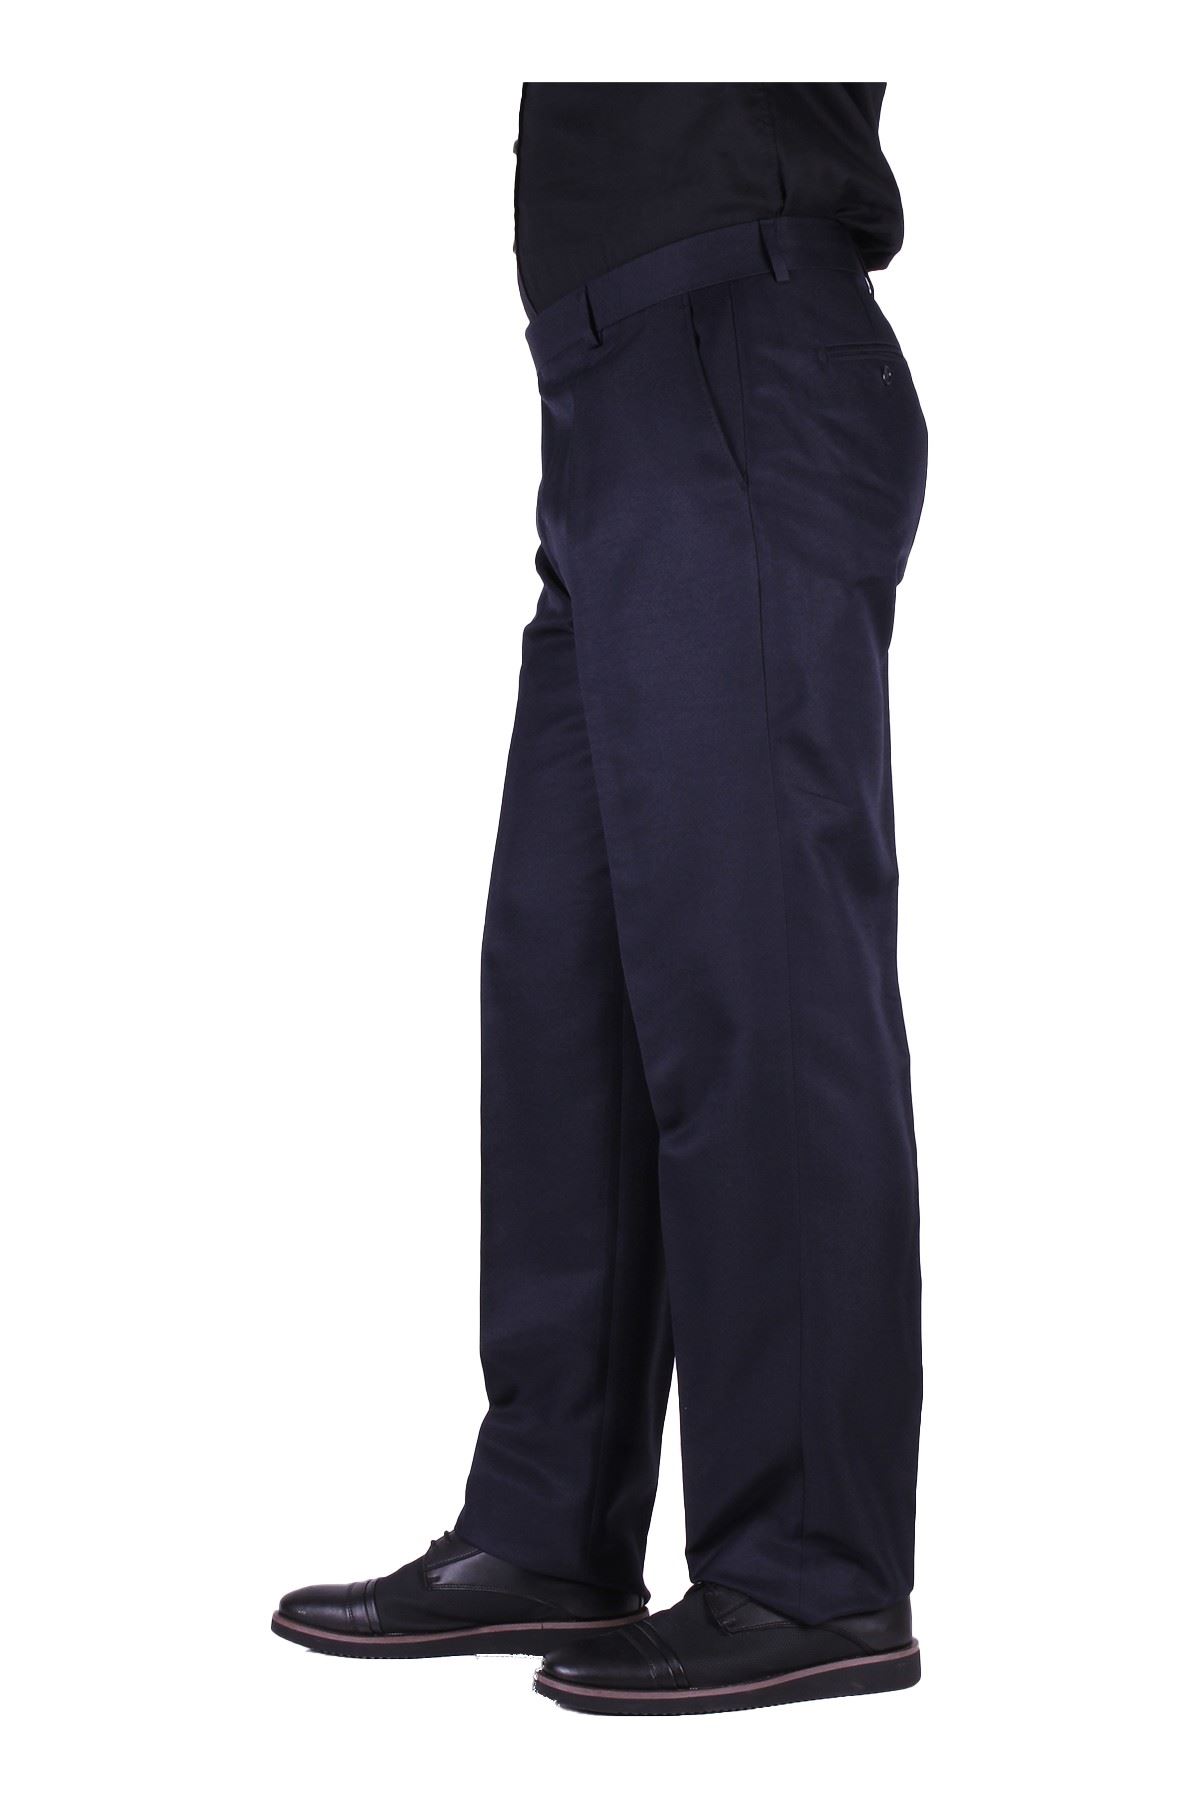 Giyinsen Erkek Lacivert Klasik Pantolon - 23KL71M57002